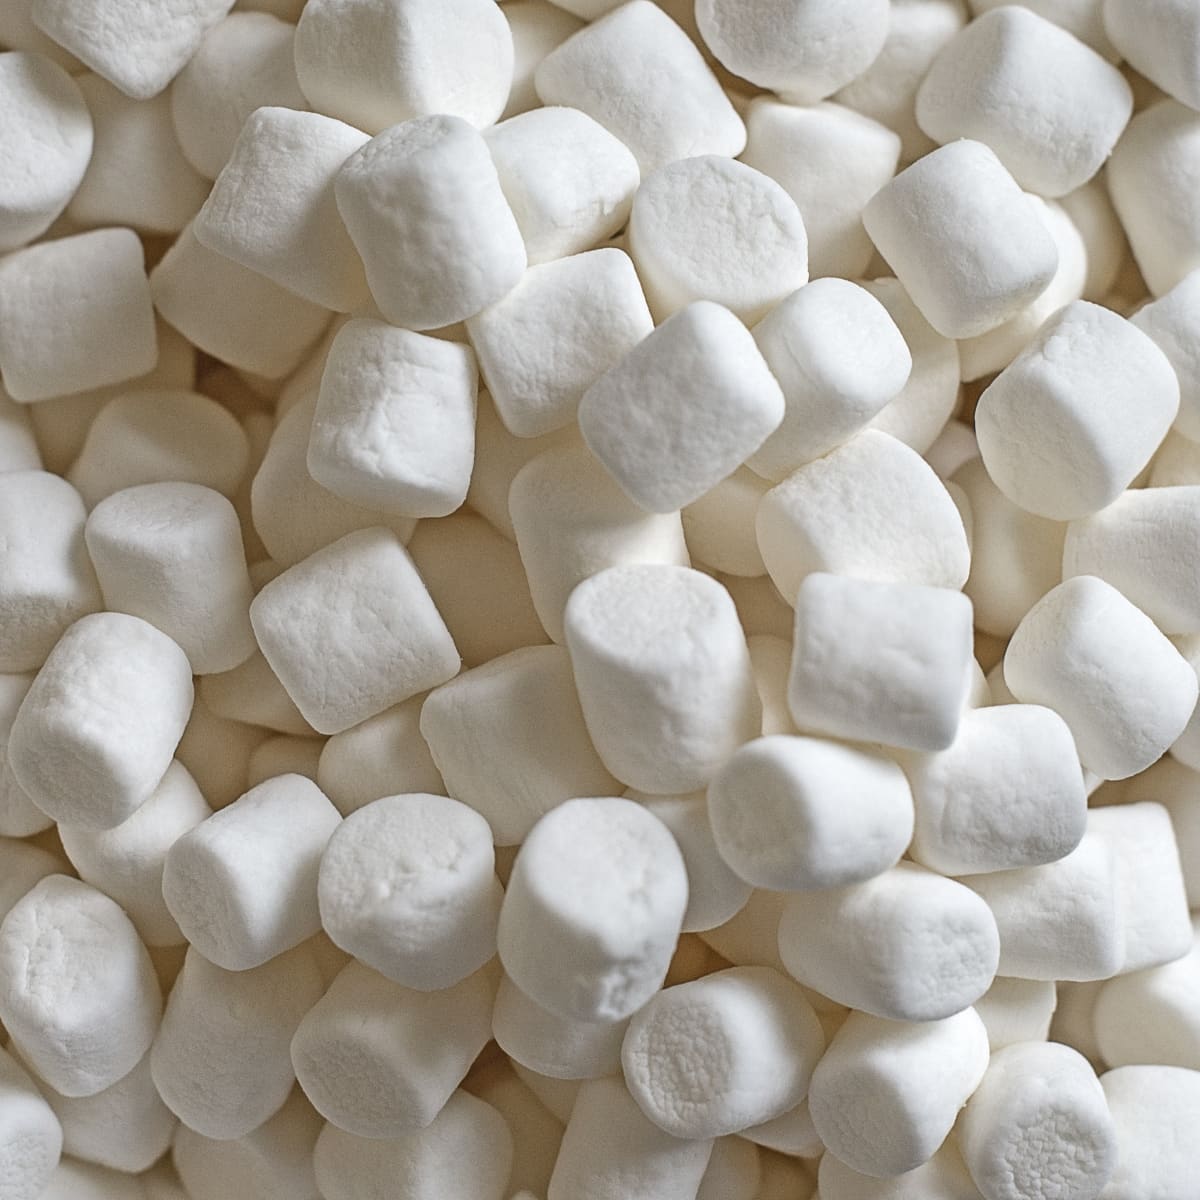 Pile of marshmallows.